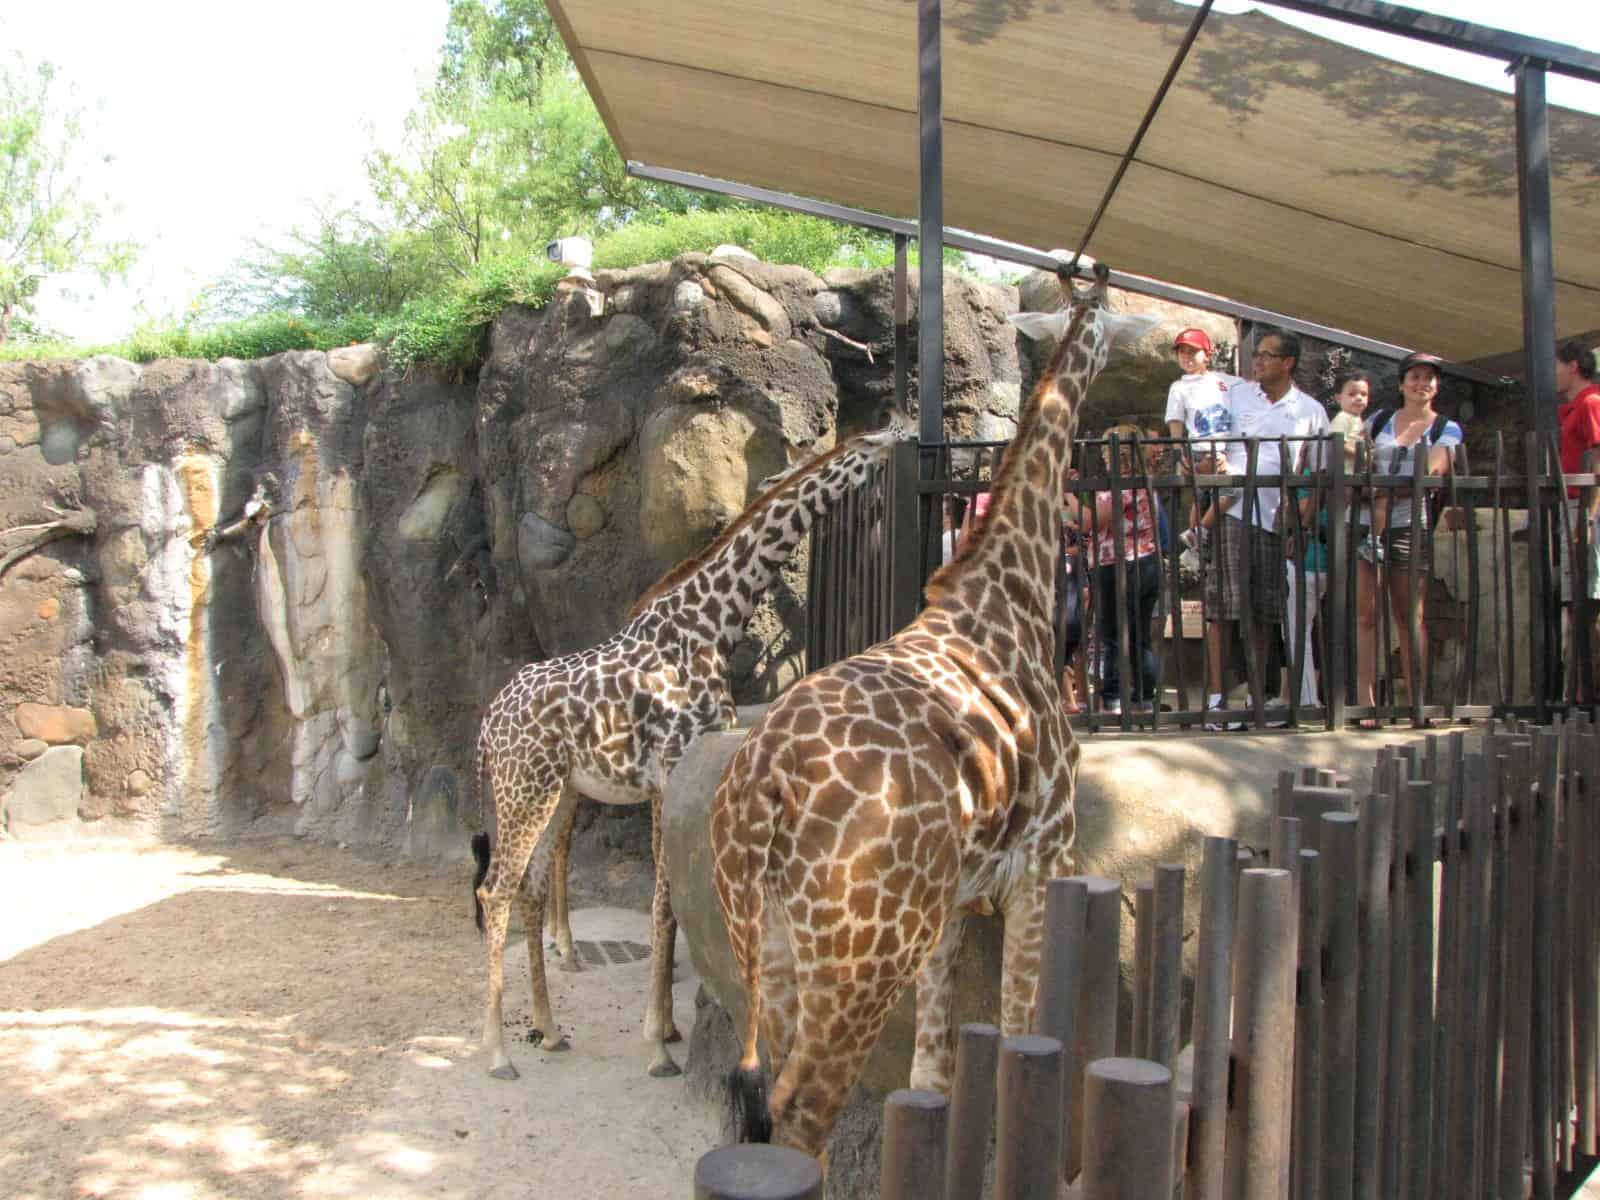 Giraffes at Houston Zoo in Houston TX